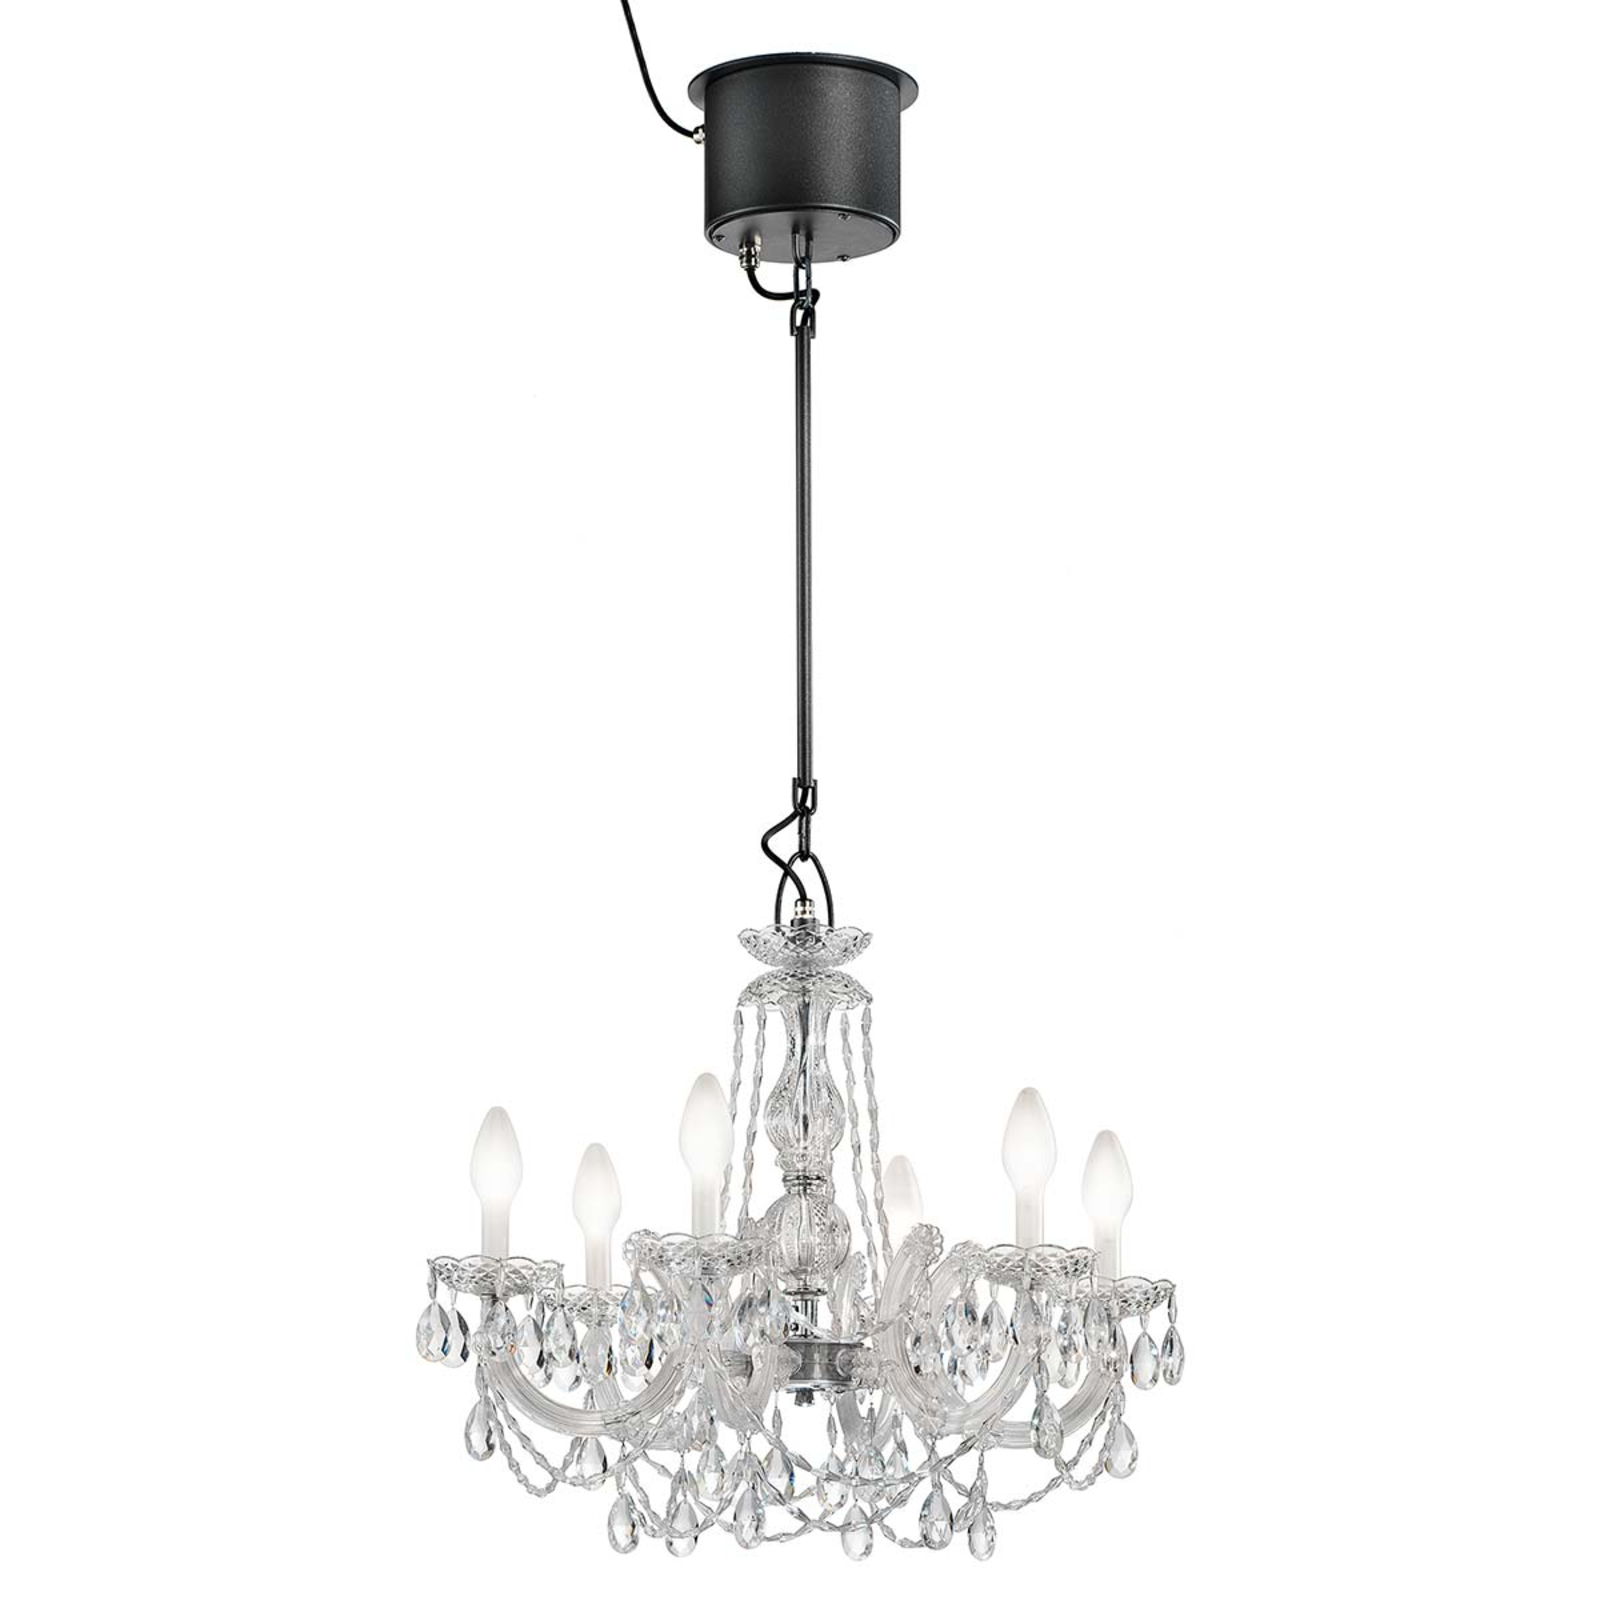 Drylight S6 6-bulb outdoor LED chandelier